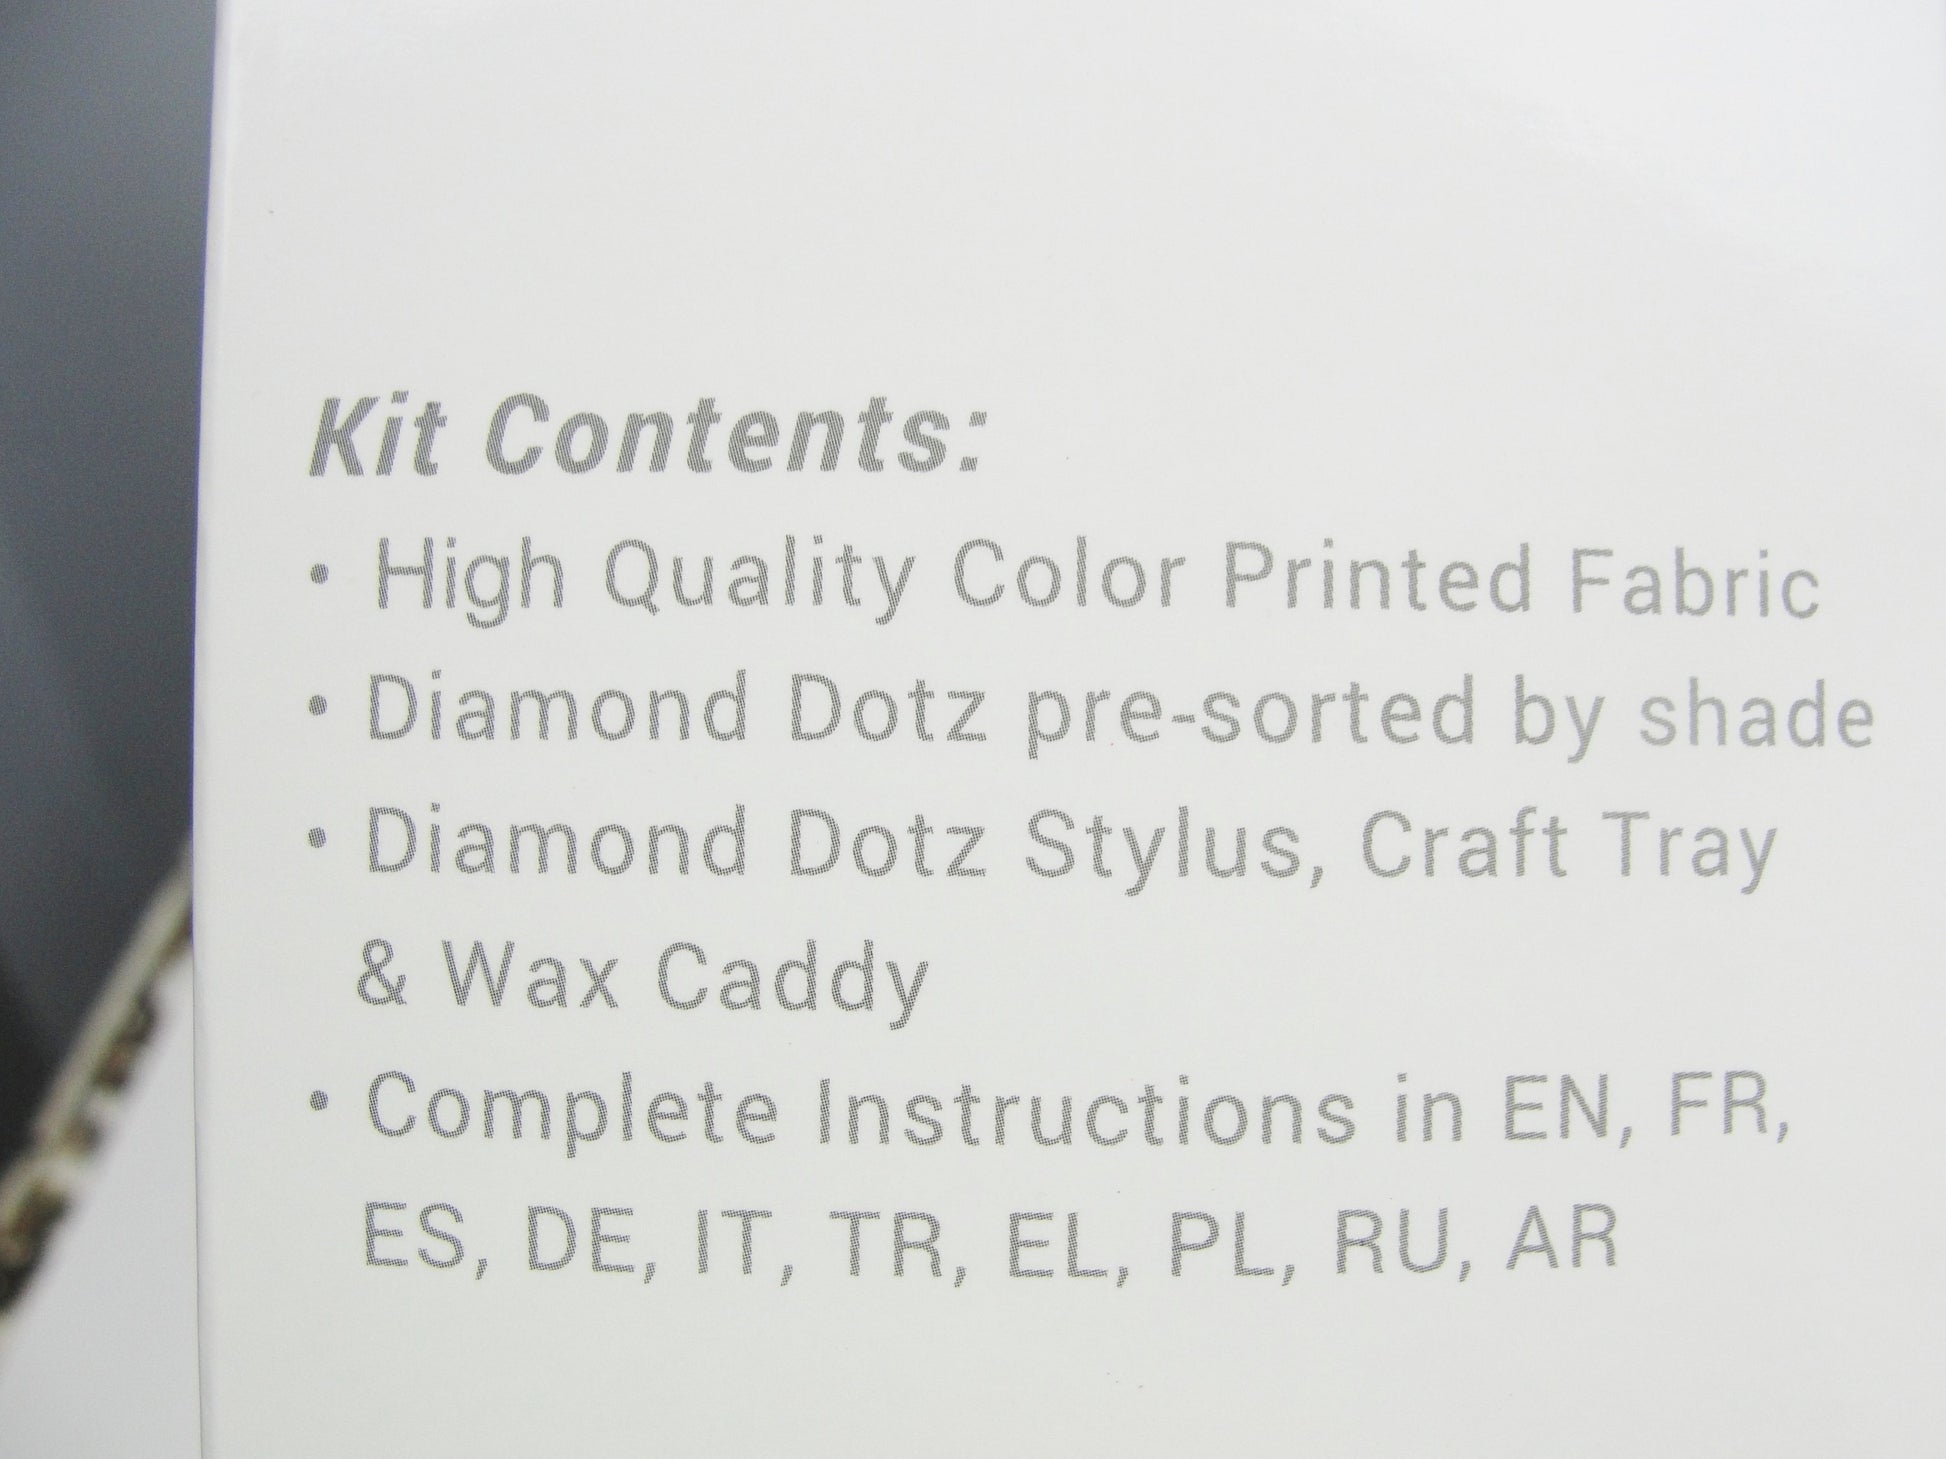 Diamond Dotz gold butterfly intermediate kit Flutter By Gold - General Crafts - Craft Supply House